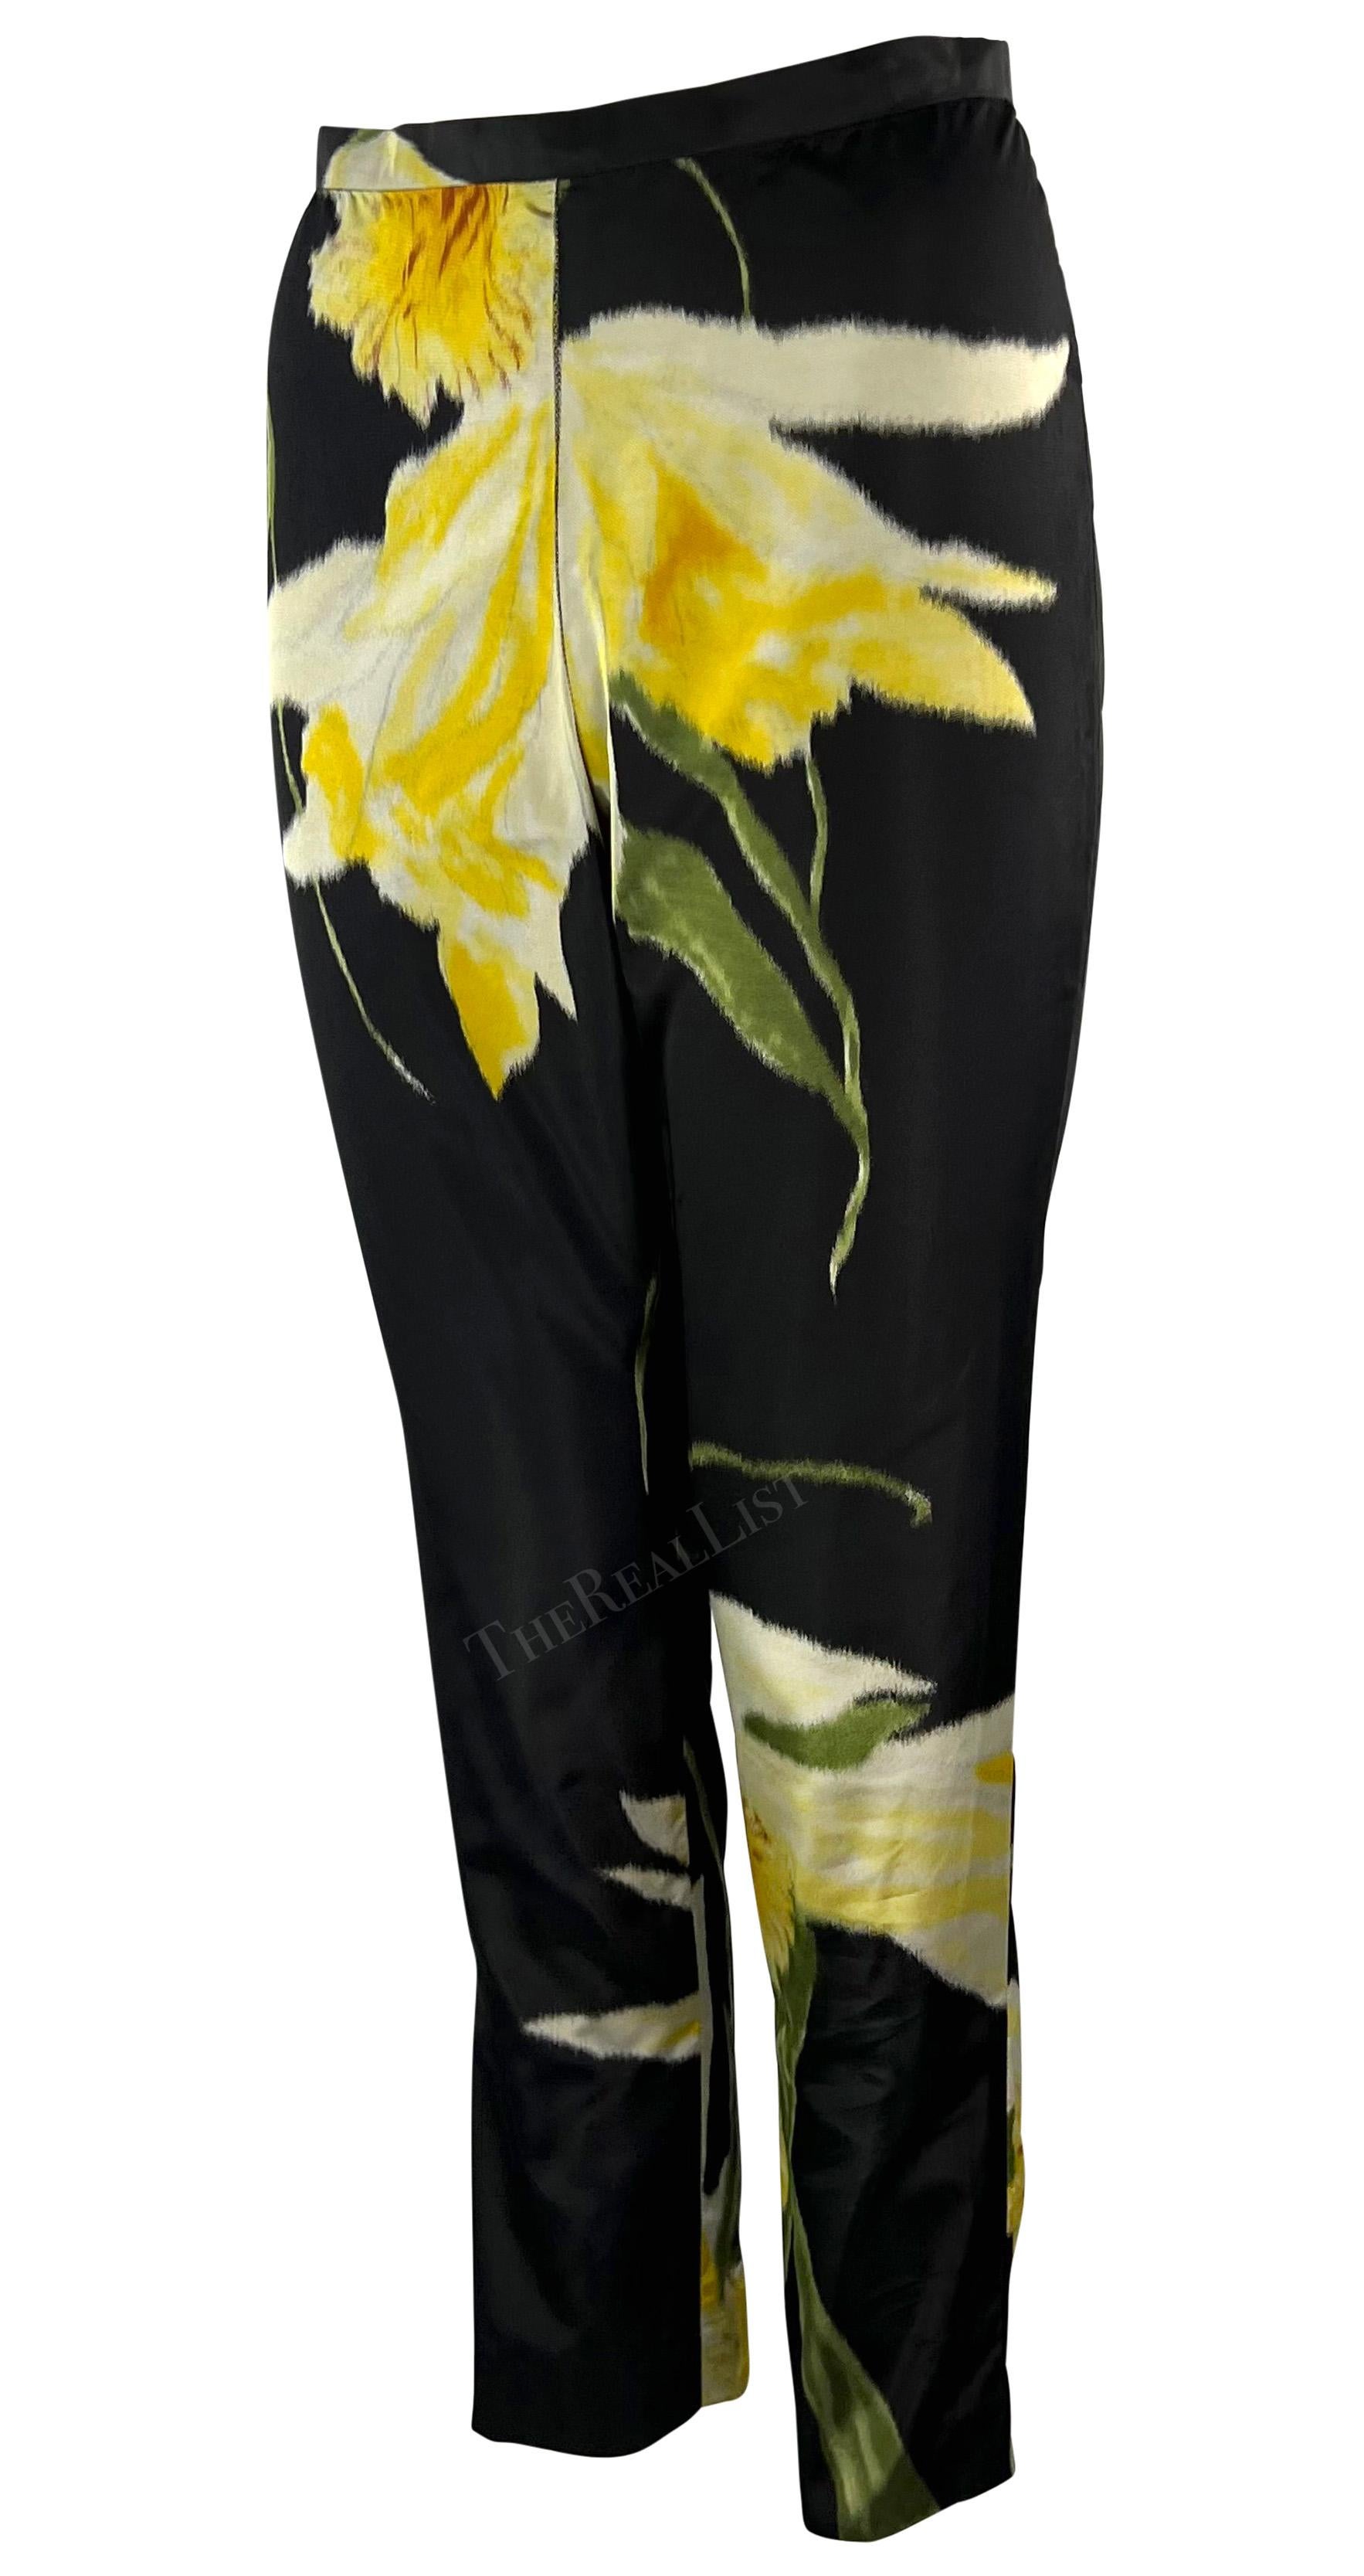 S/S 2000 Ralph Lauren Runway Black Silk Taffeta Yellow Floral Cigarette Pants For Sale 1